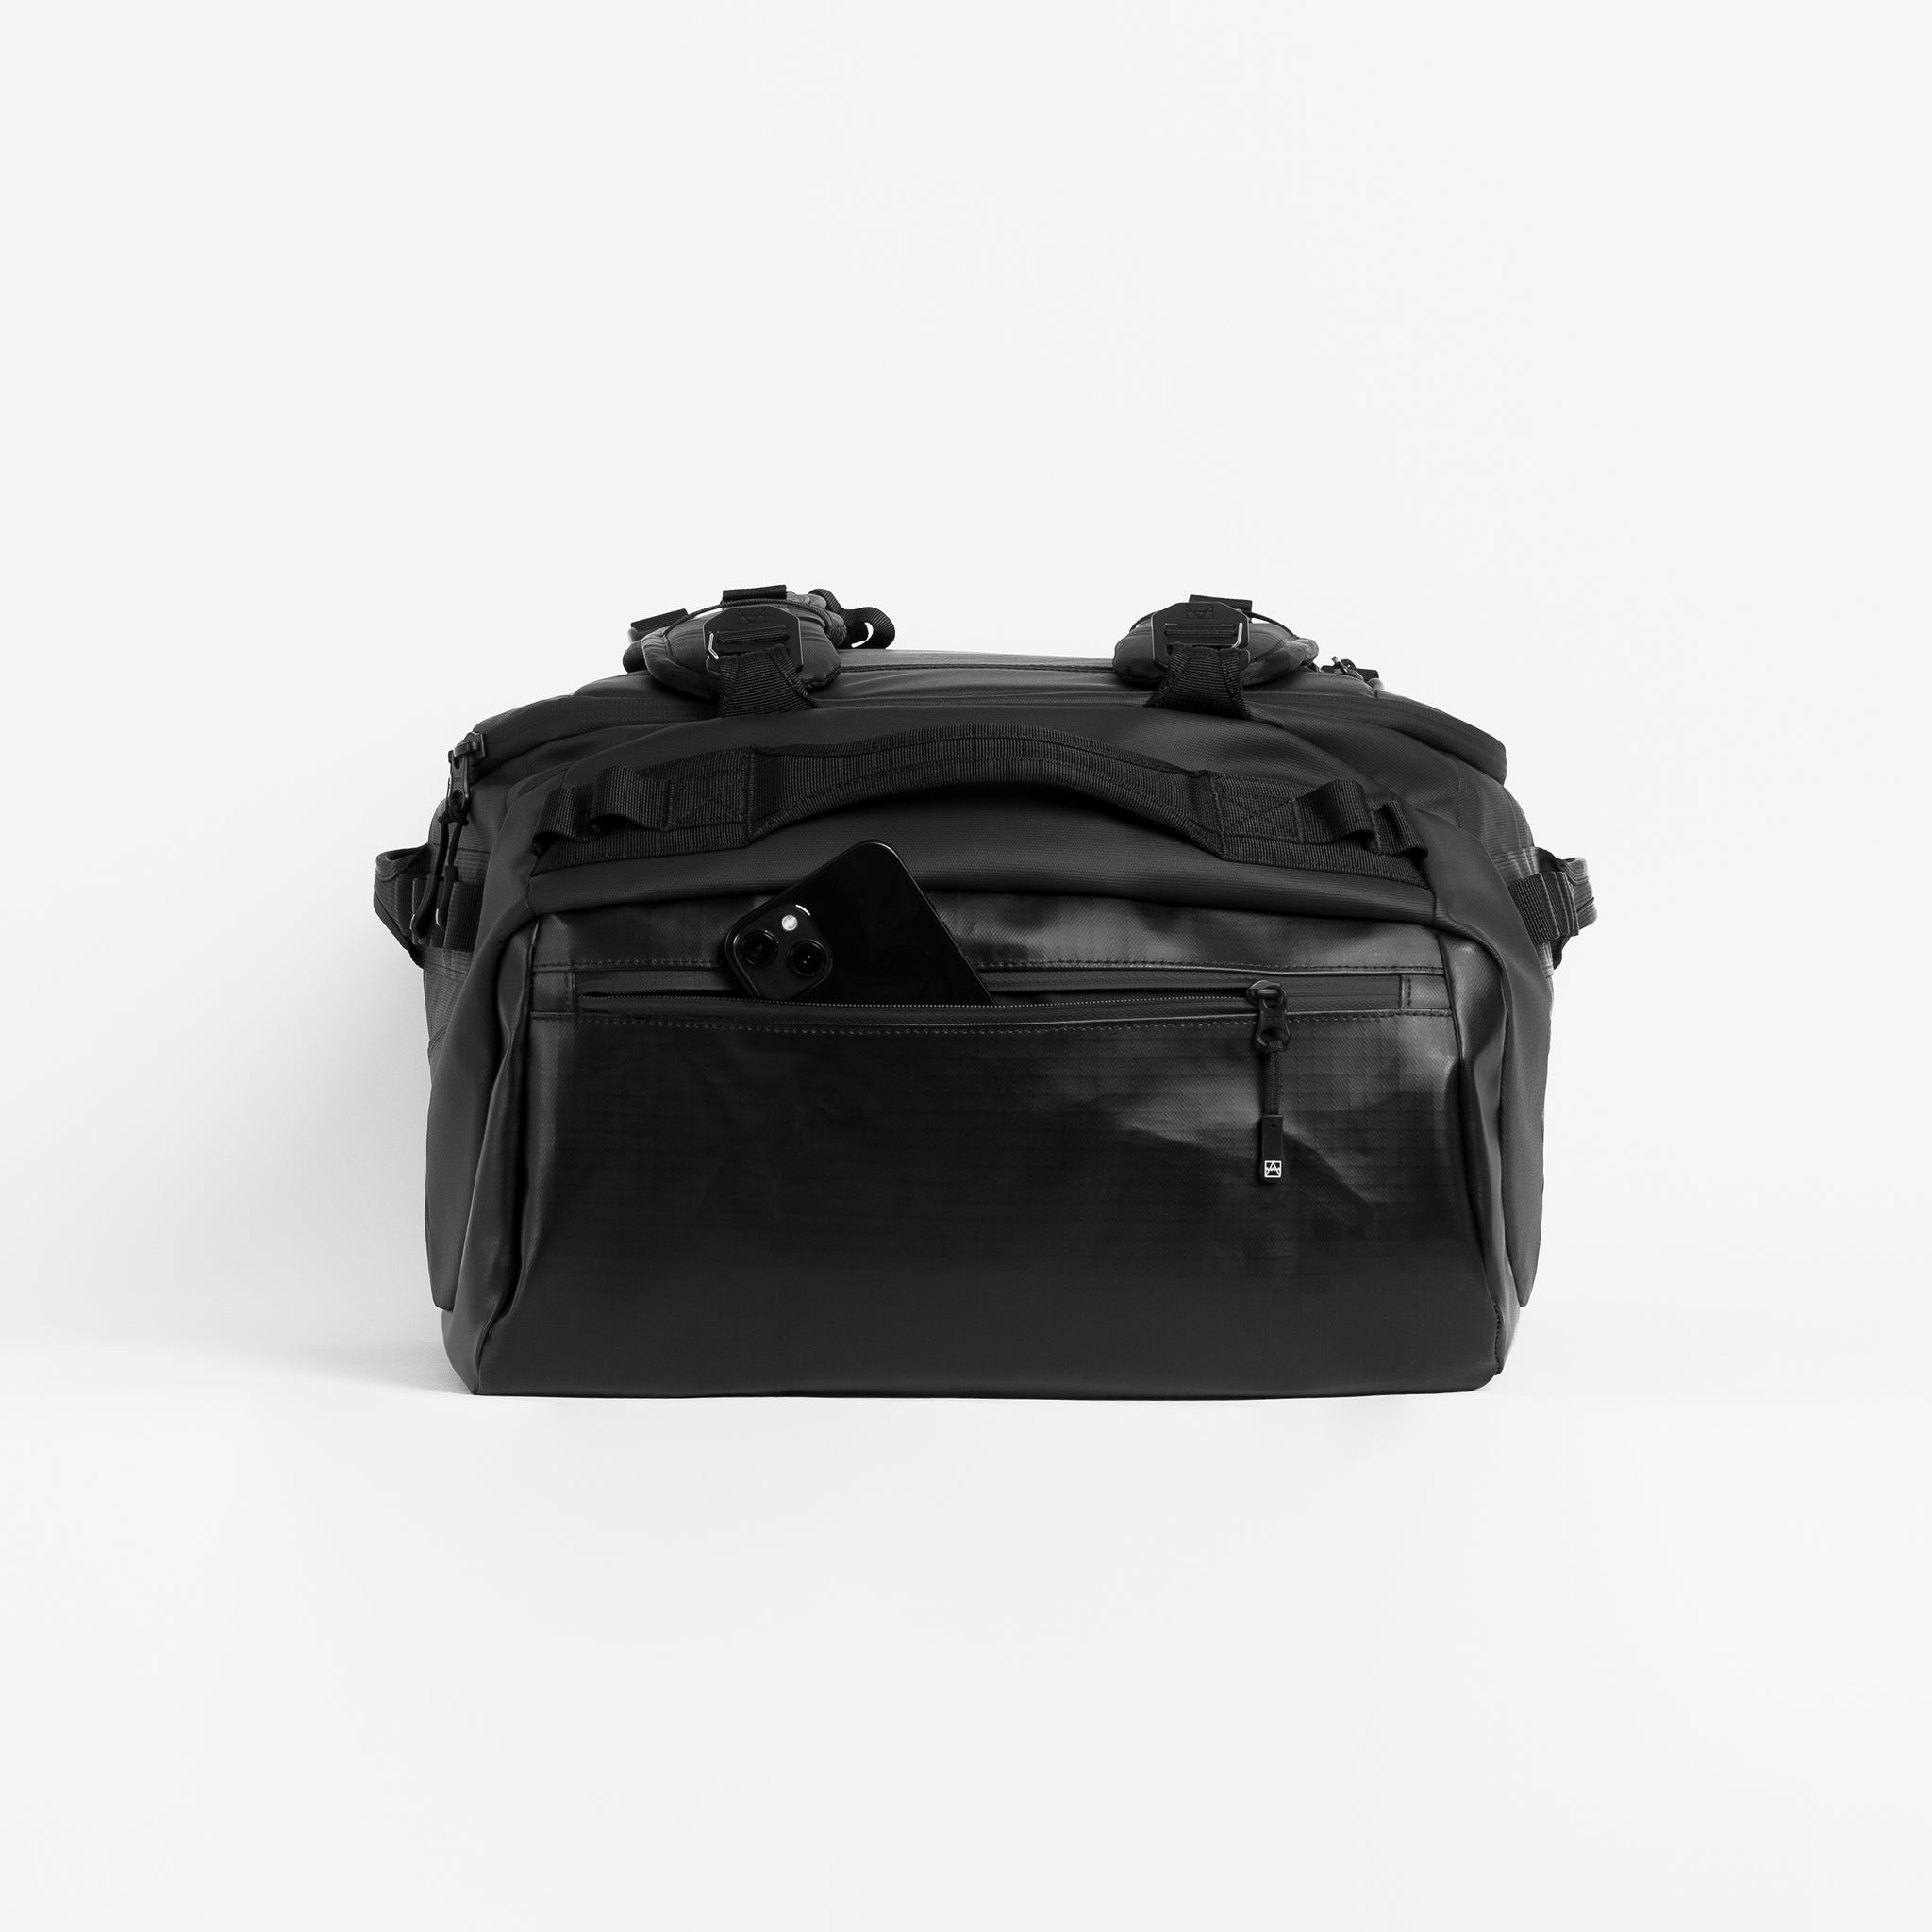 A studio shot of the phone pocket on an All Black Kit Bag 65L